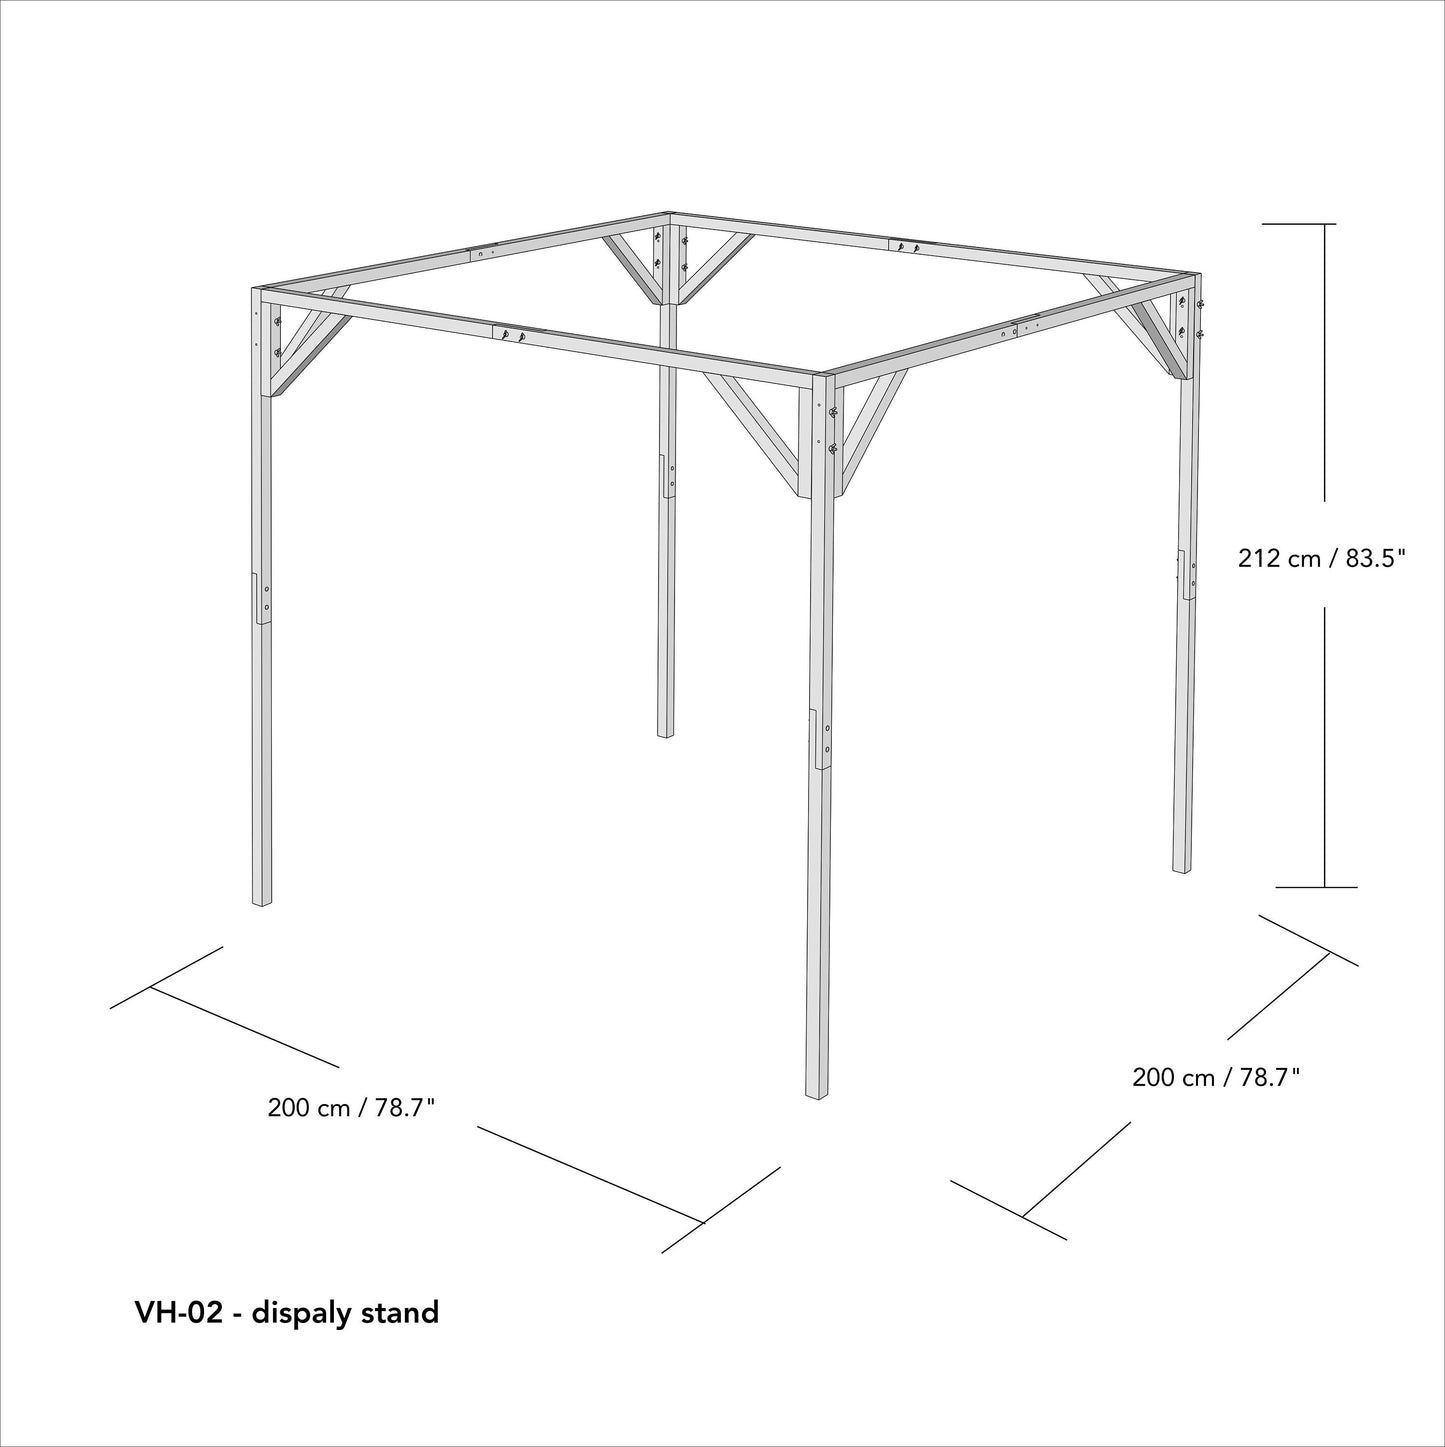 Trade show foldable wooden gazebo canopy VH-02, tent alternative, 6.5'x6.5'| Milimetry